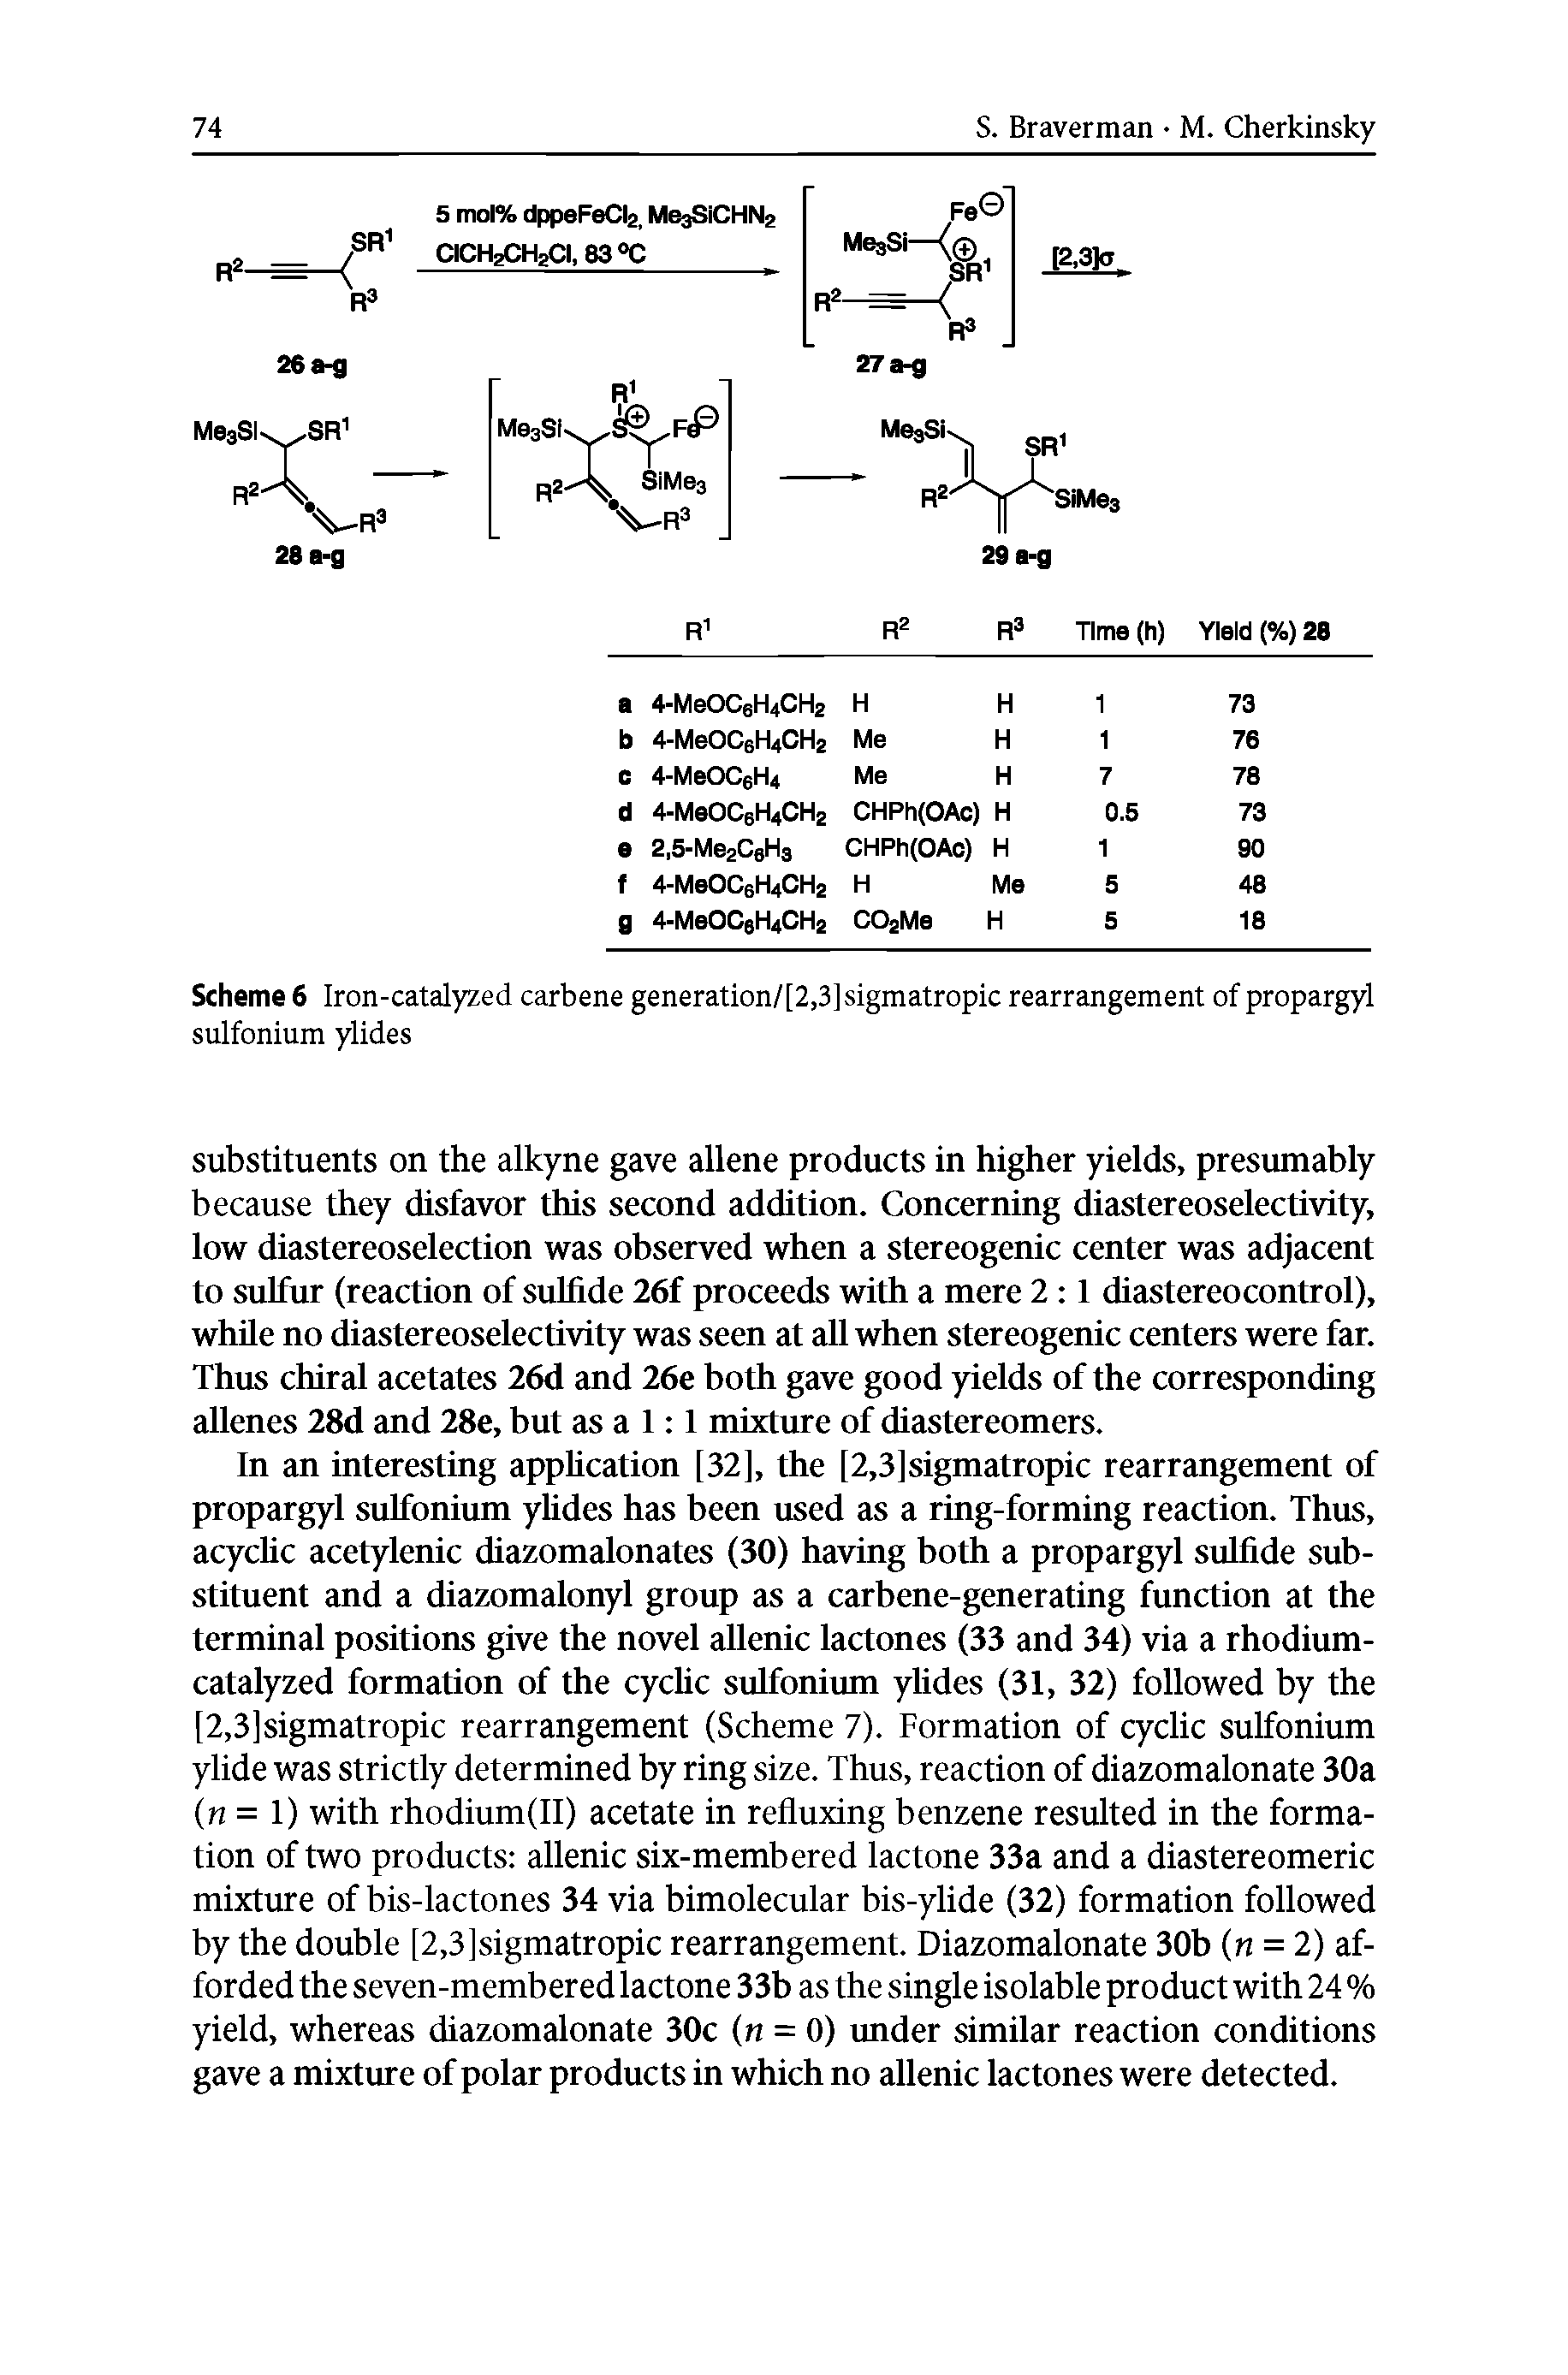 Scheme 6 Iron-catalyzed carbene generation/[2,3]sigmatropic rearrangement of propargyl sulfonium ylides...